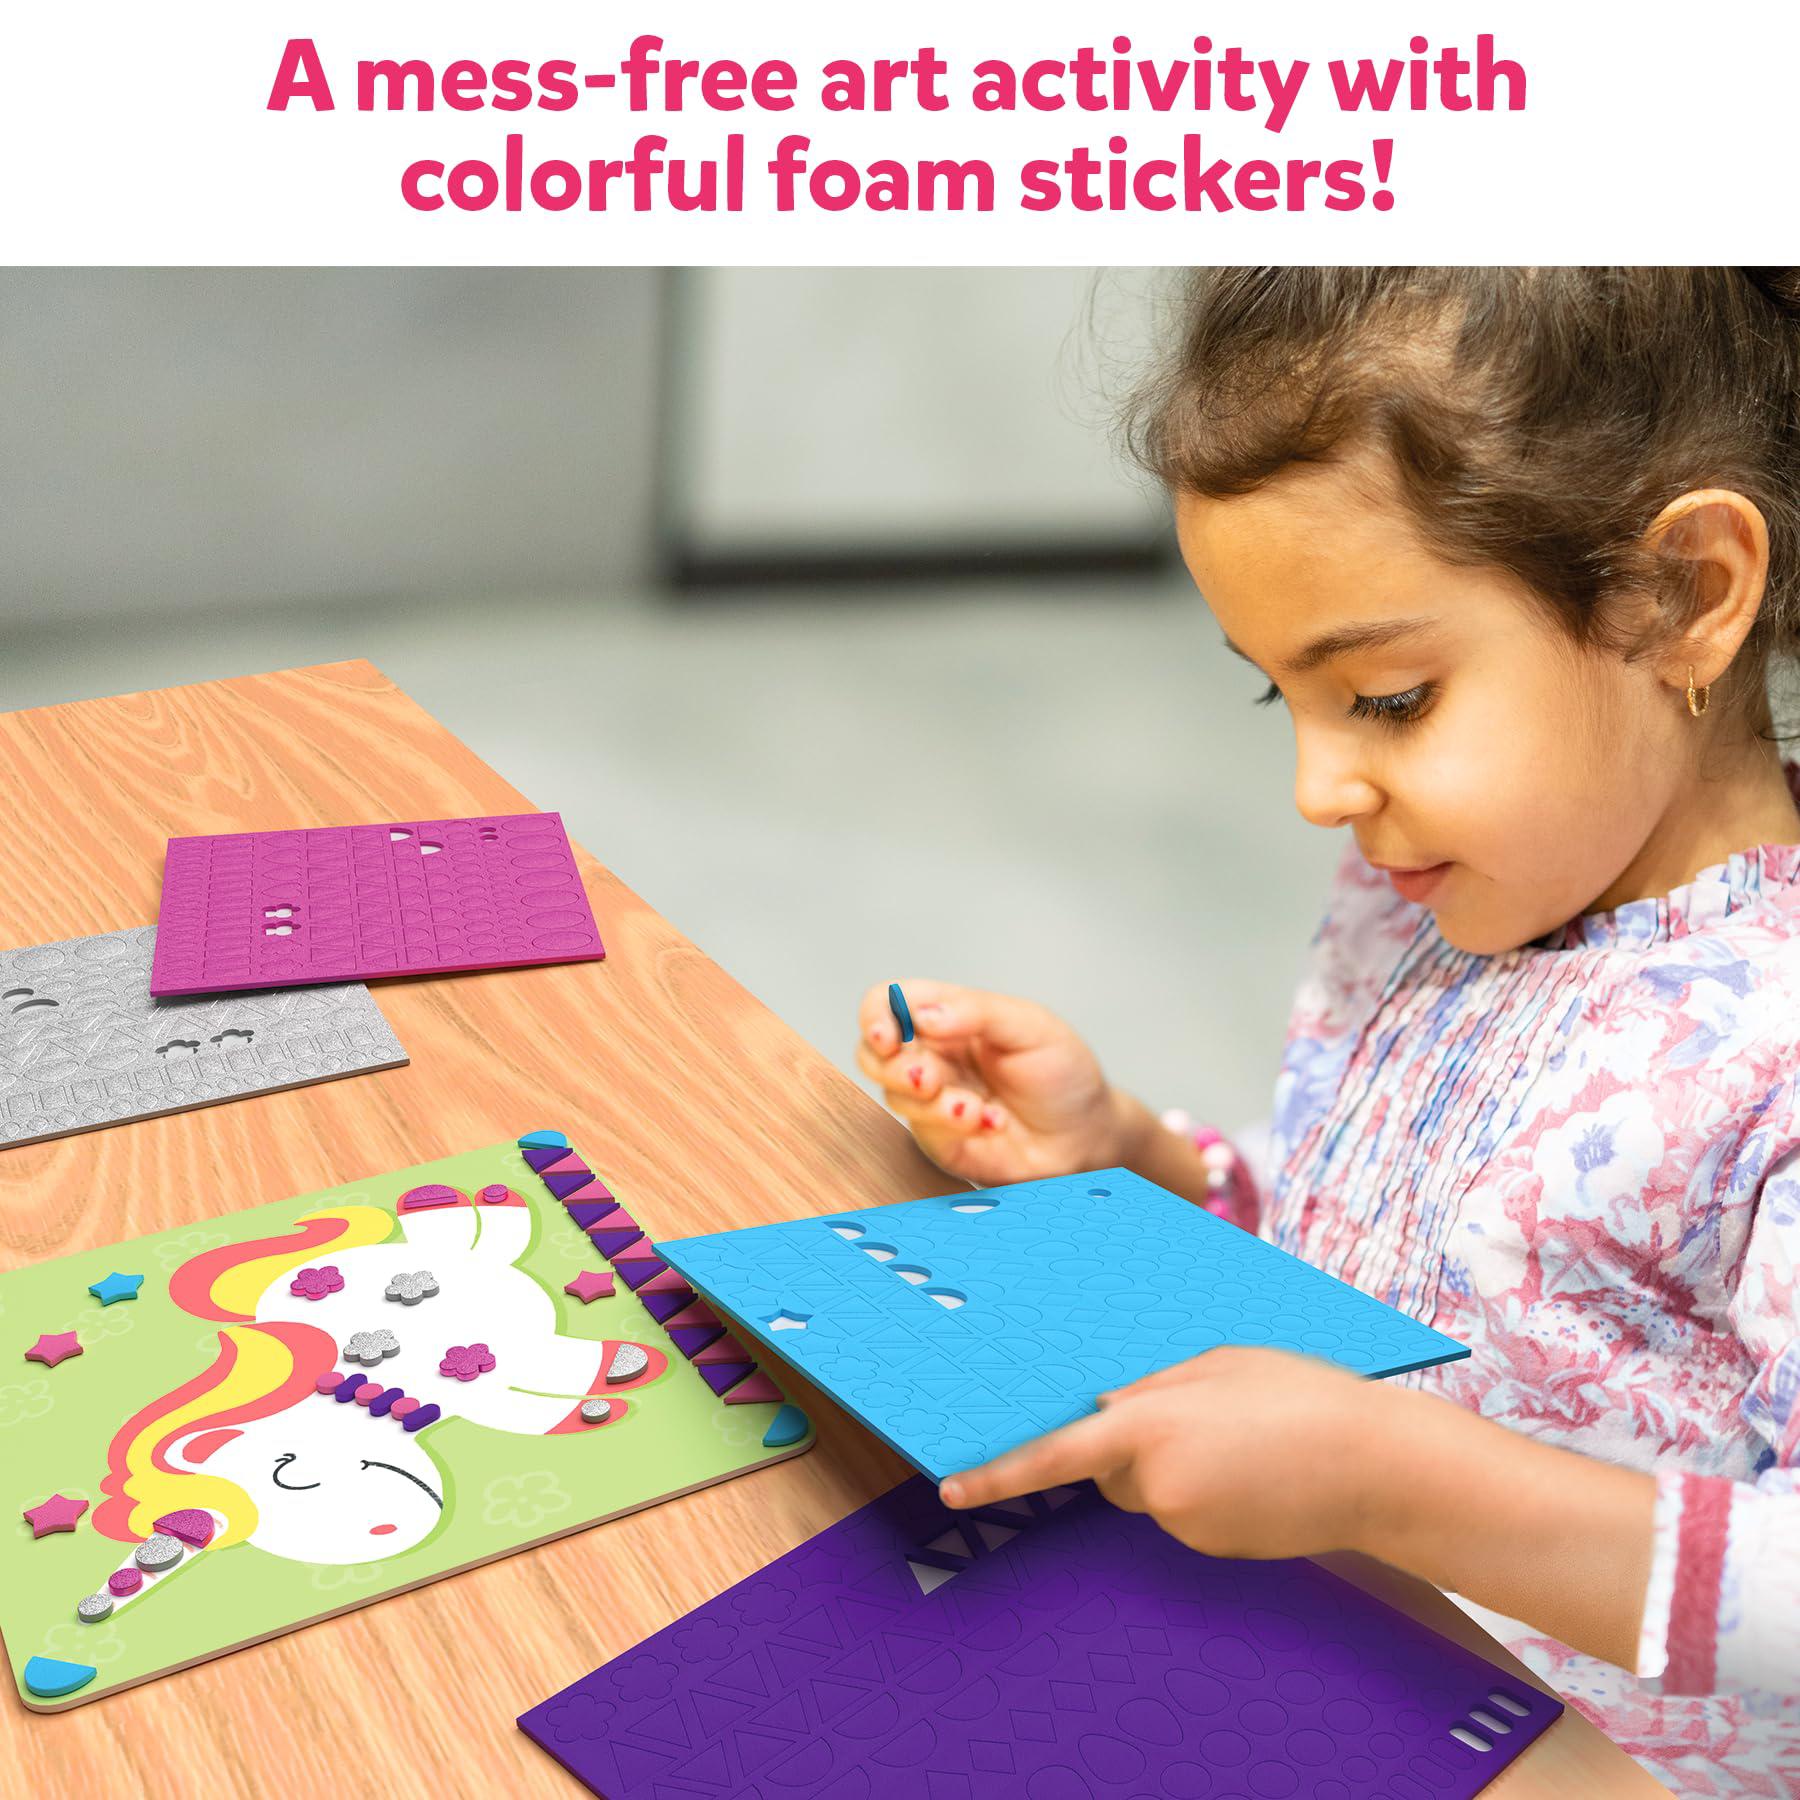 skillmatics art activity - fun with foam unicorns & princesses, no mess sticker art for kids, craft kits, diy activity, gifts